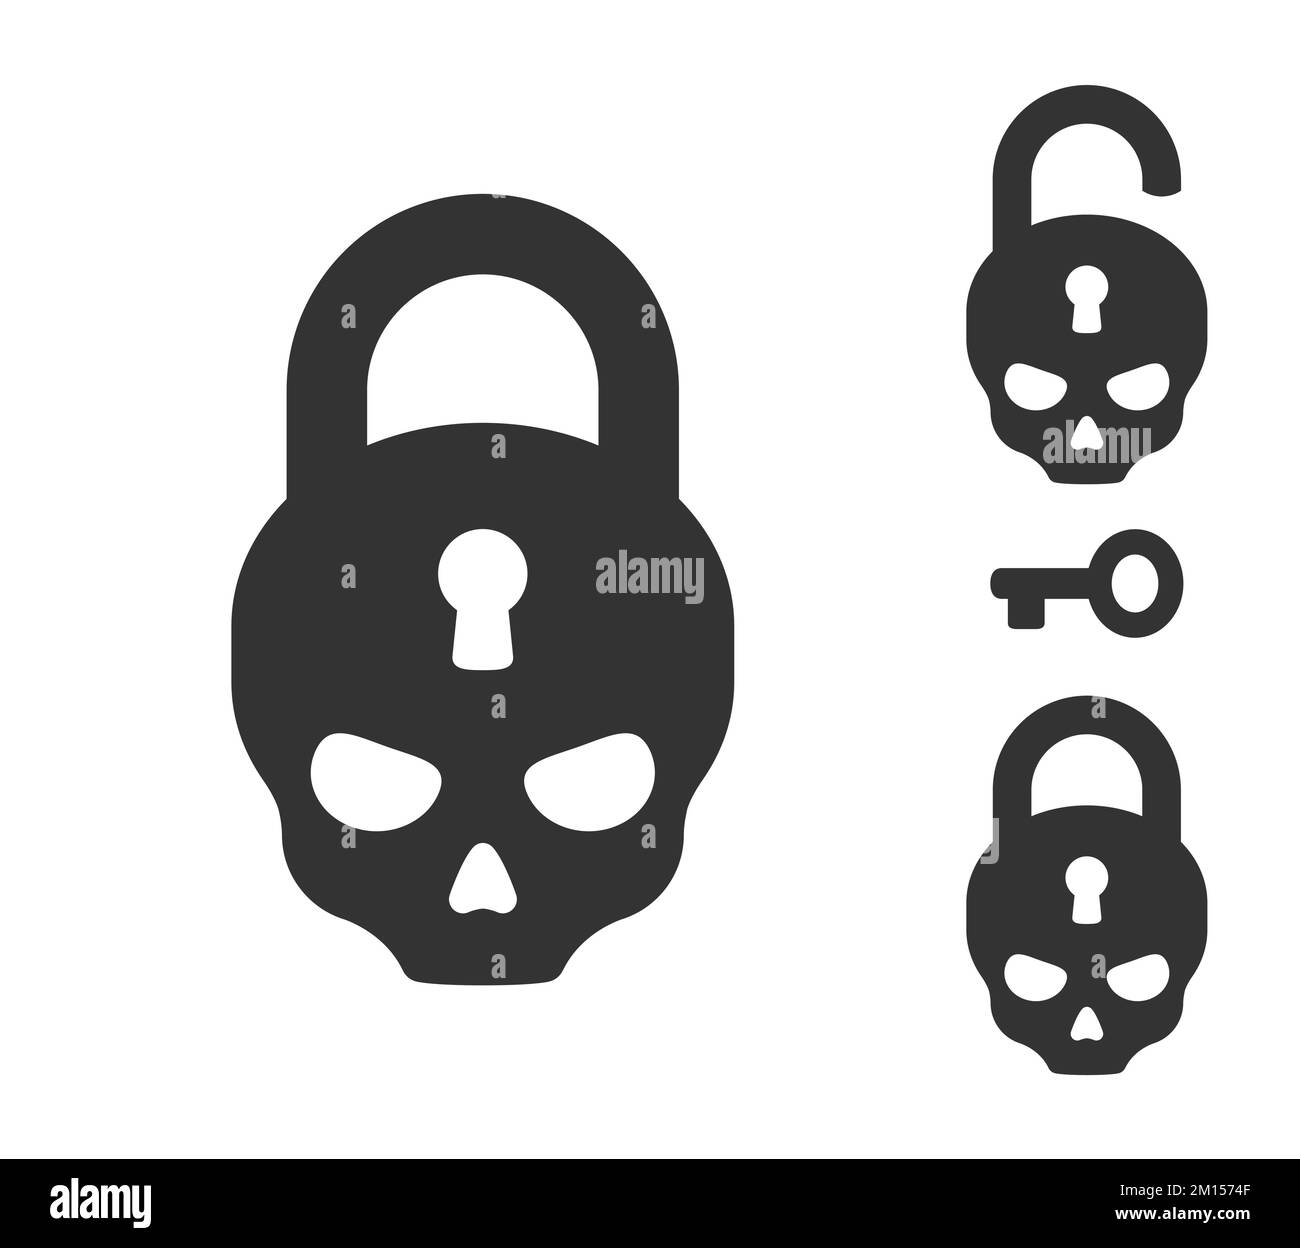 Skull lock icon set. Security padlock concept. Vector design elements. Stock Vector